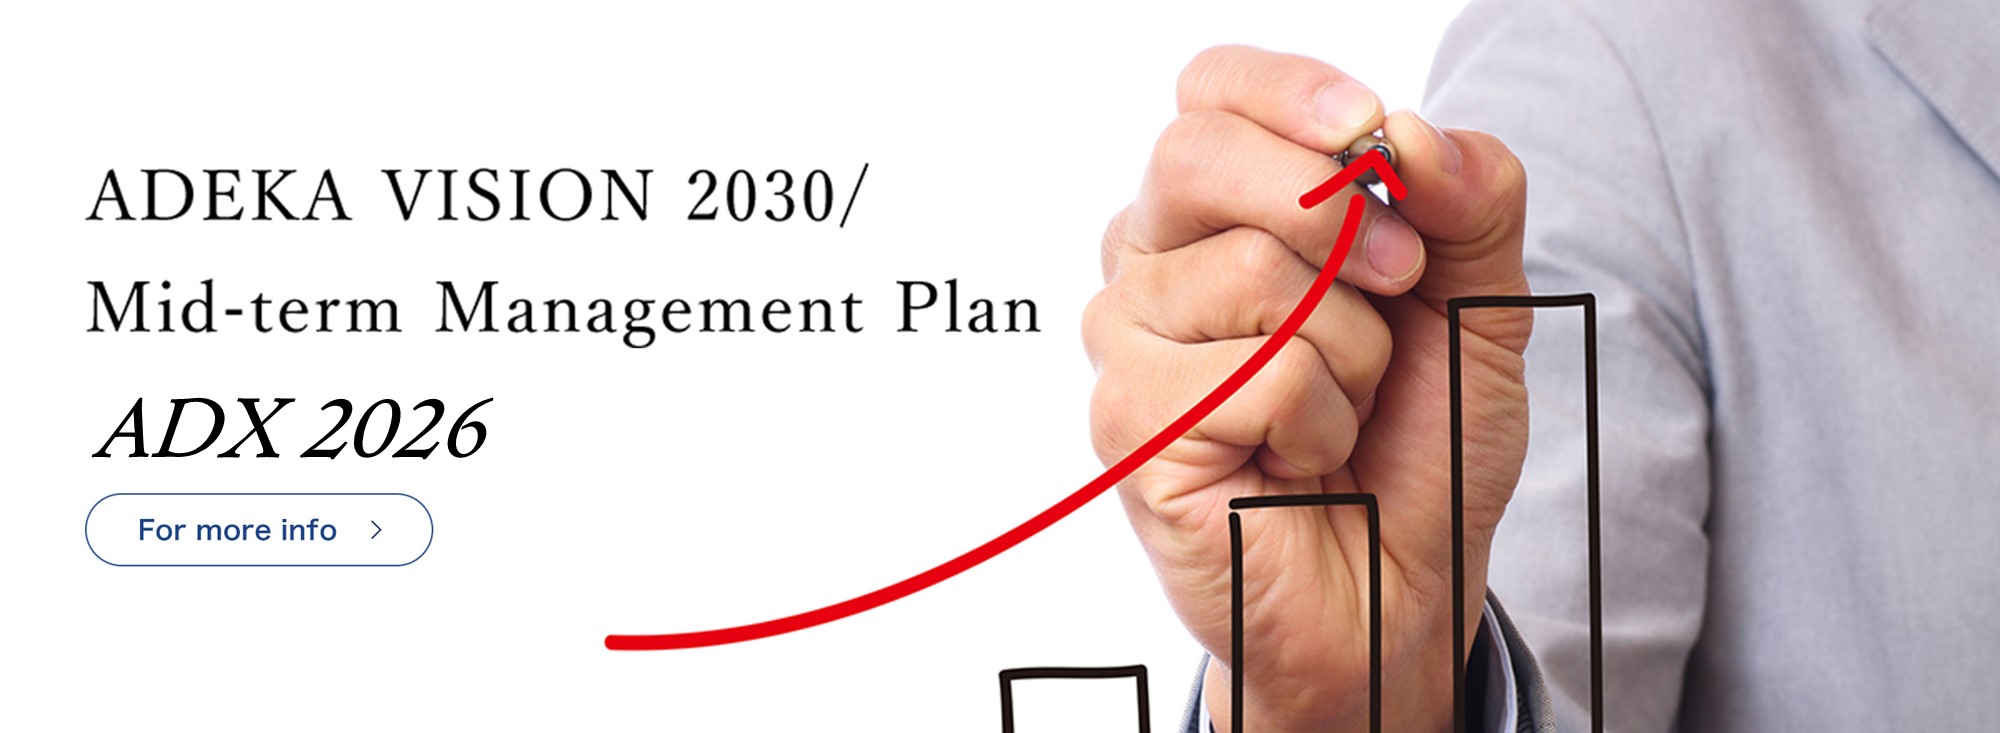 ADEKA VISION 2030/Mid-term Management Plan ADX 2026